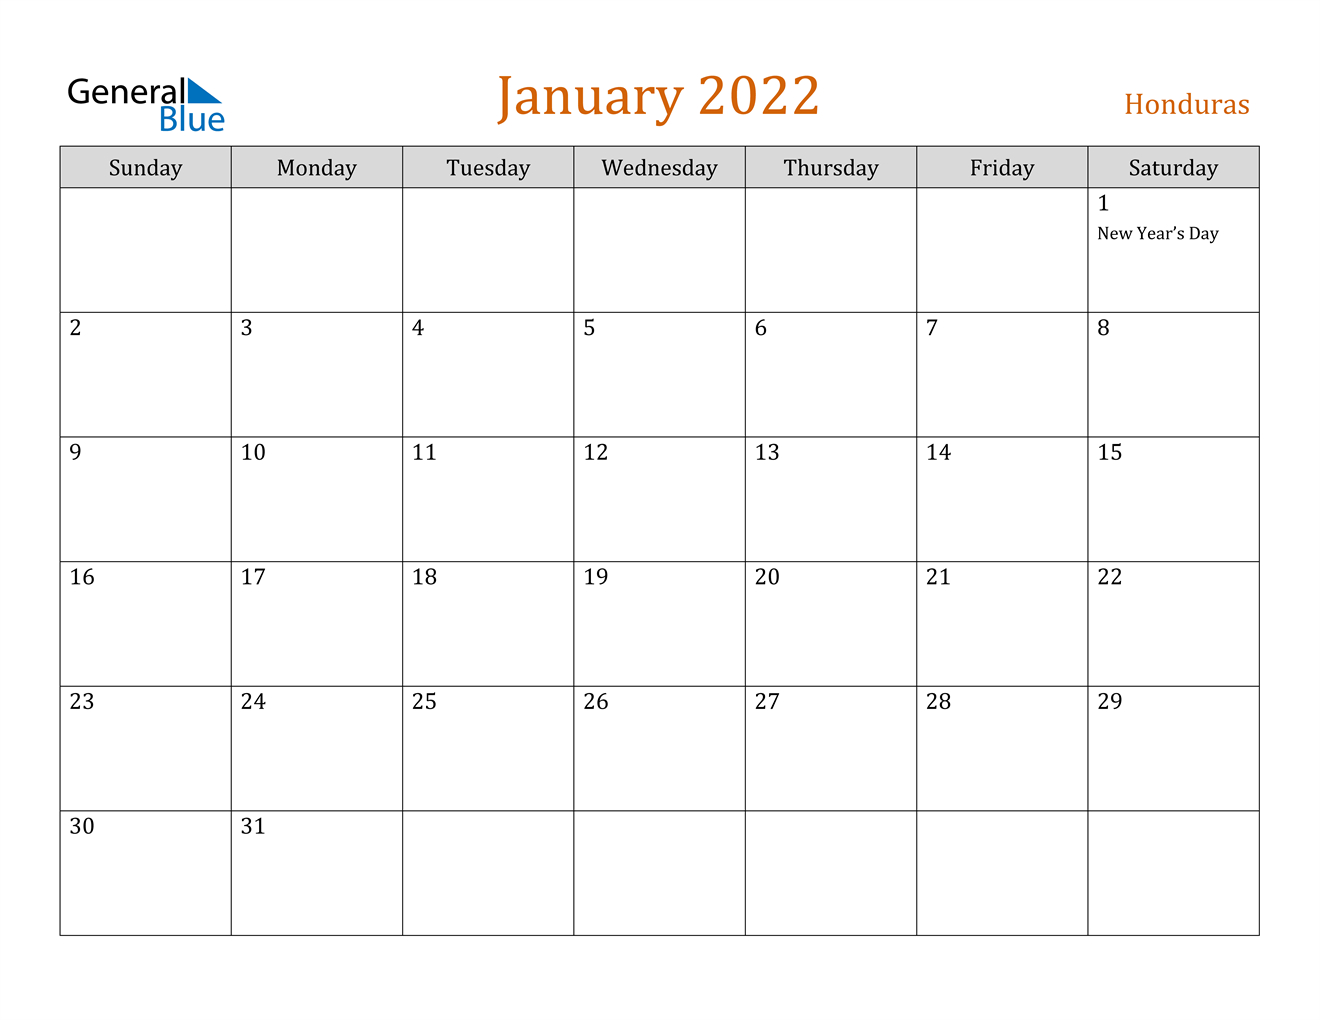 January 2022 Calendar - Honduras